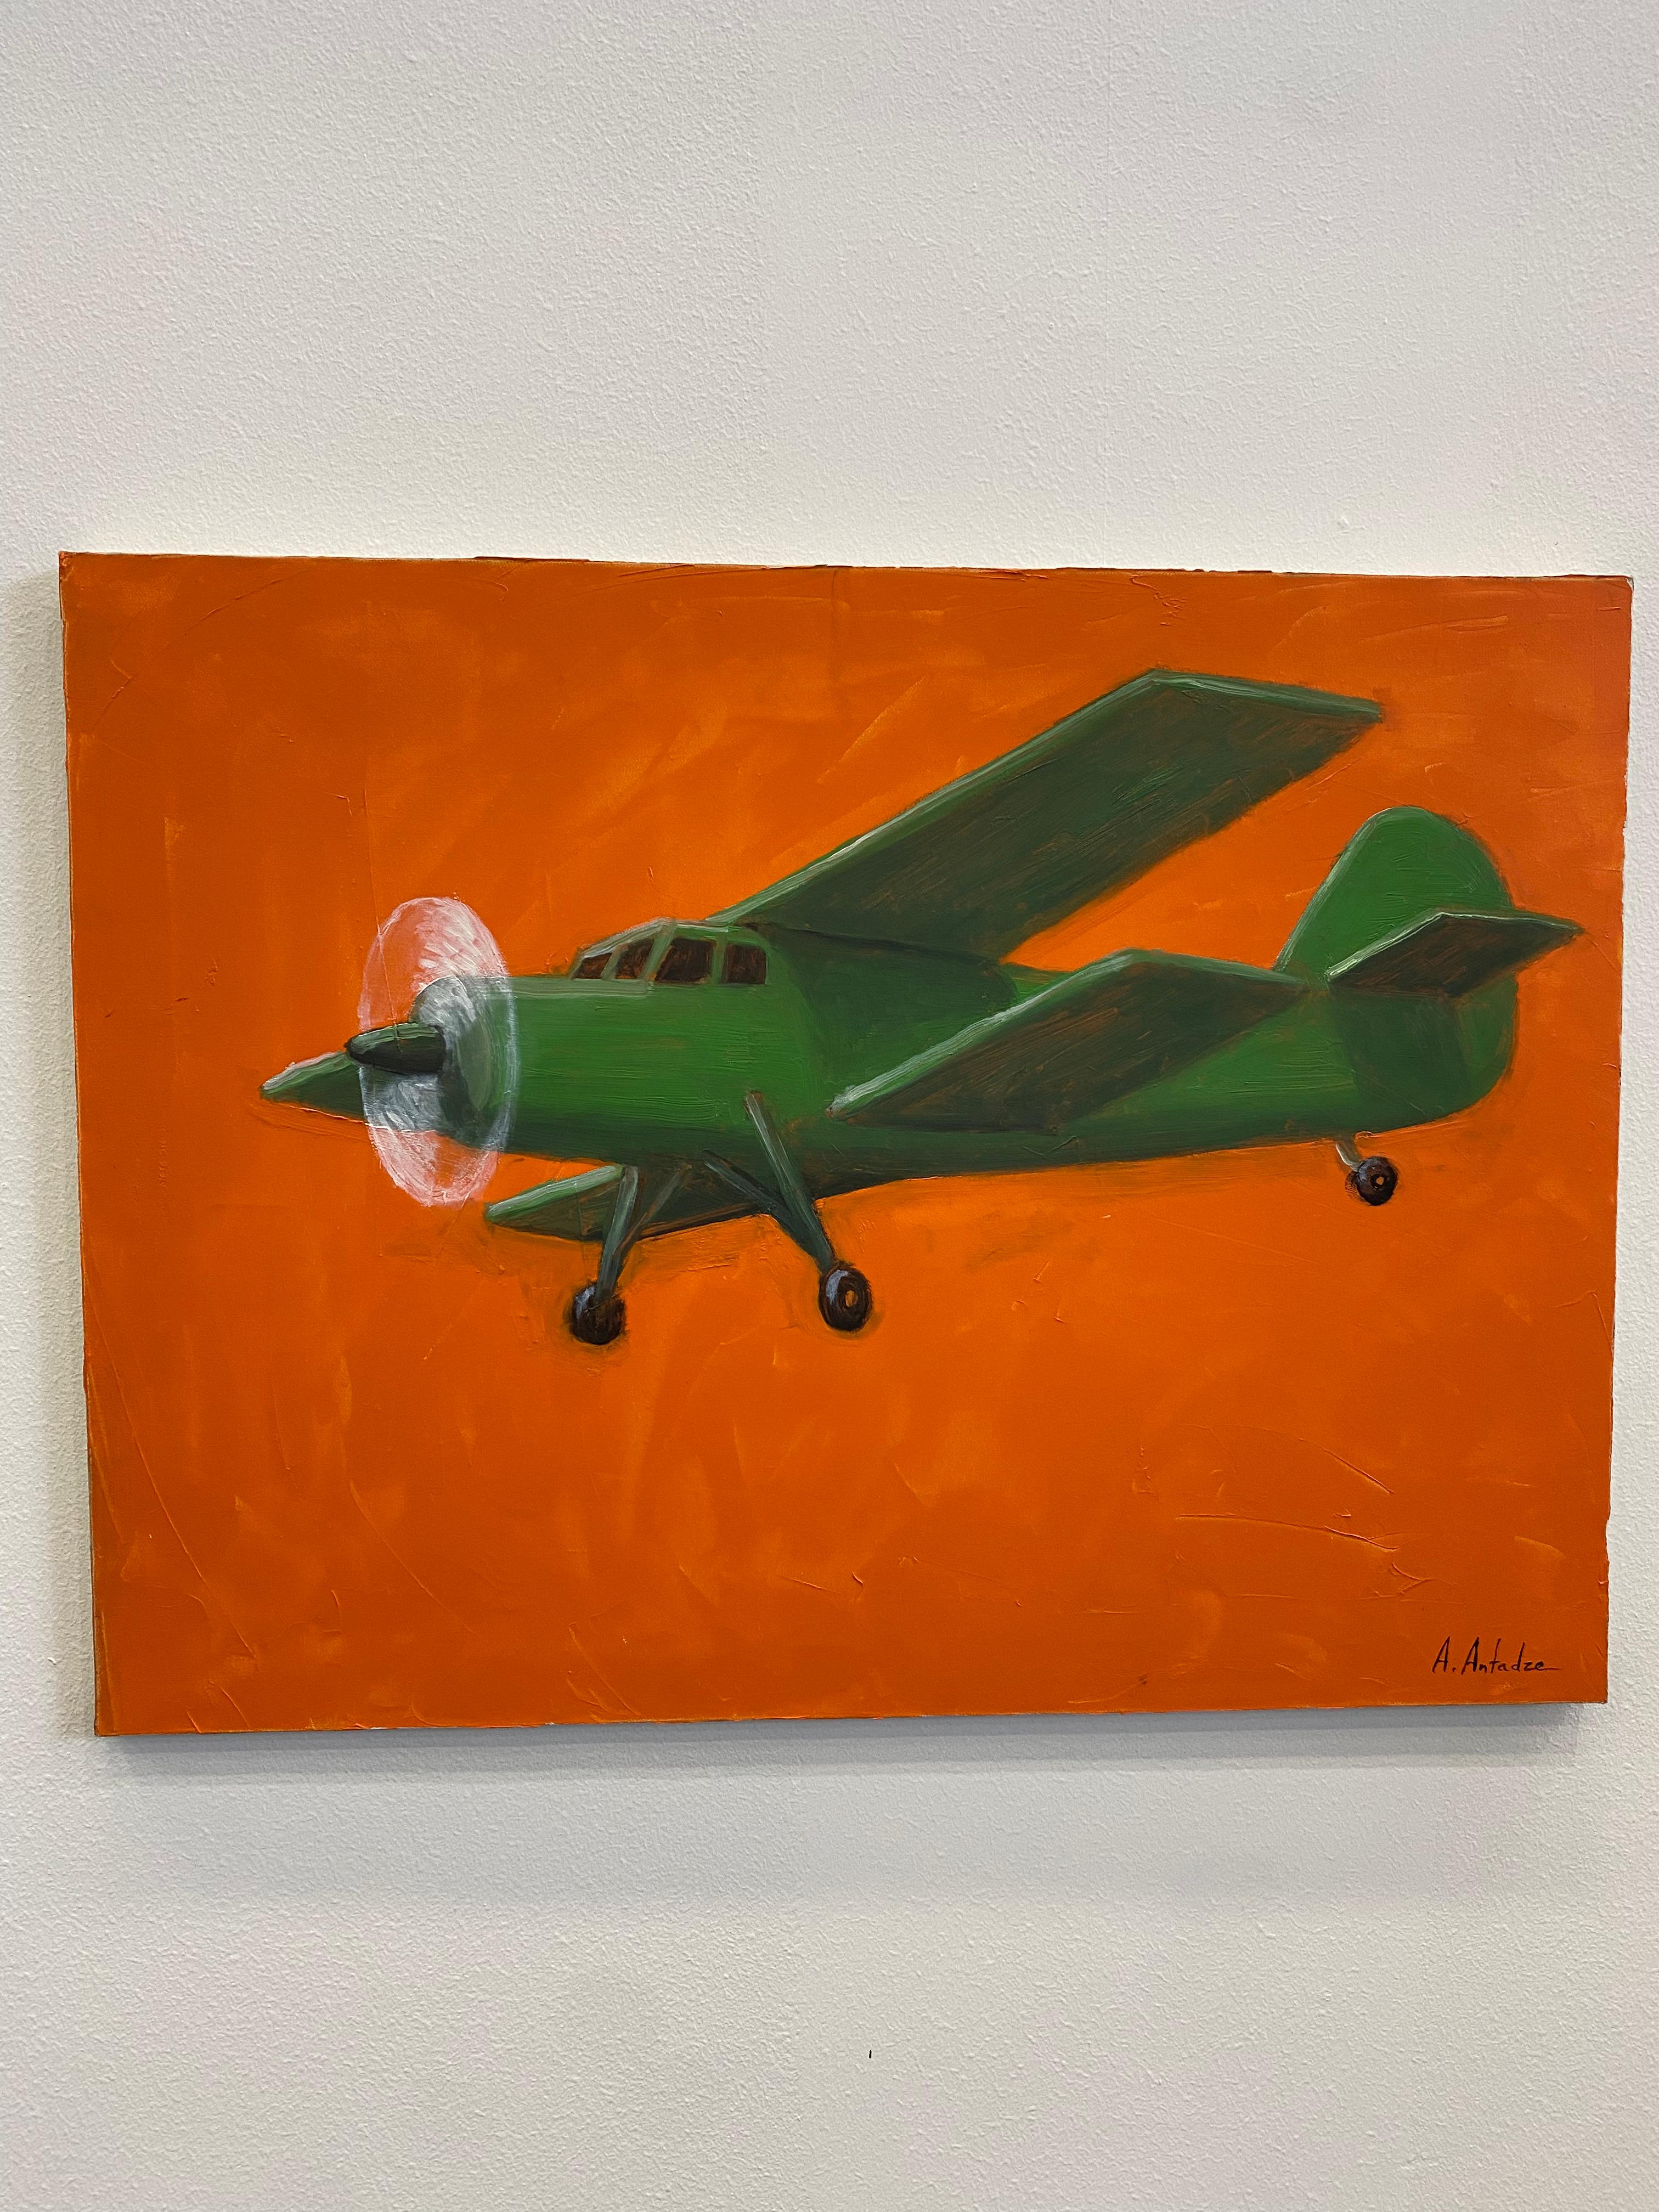 Georgian Contemporary Art by Alexander Sandro Antadze - Green Plane For Sale 3